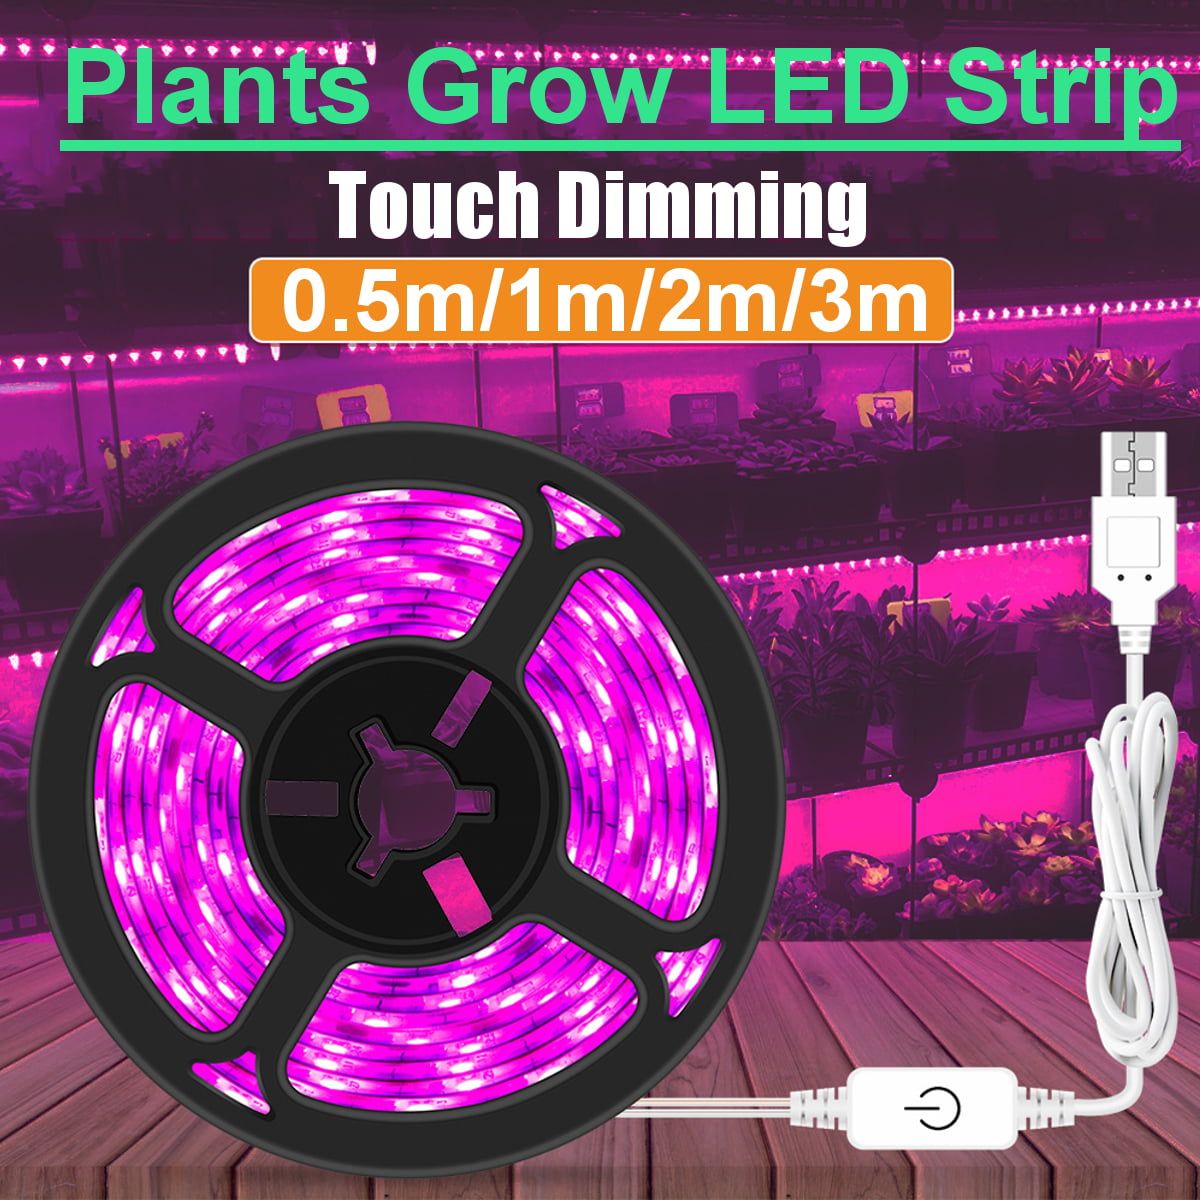 Details about   USB 5V 2835 Grow LED Strip Light Full Spectrum Dimming Veg Plant Growing Lamp 